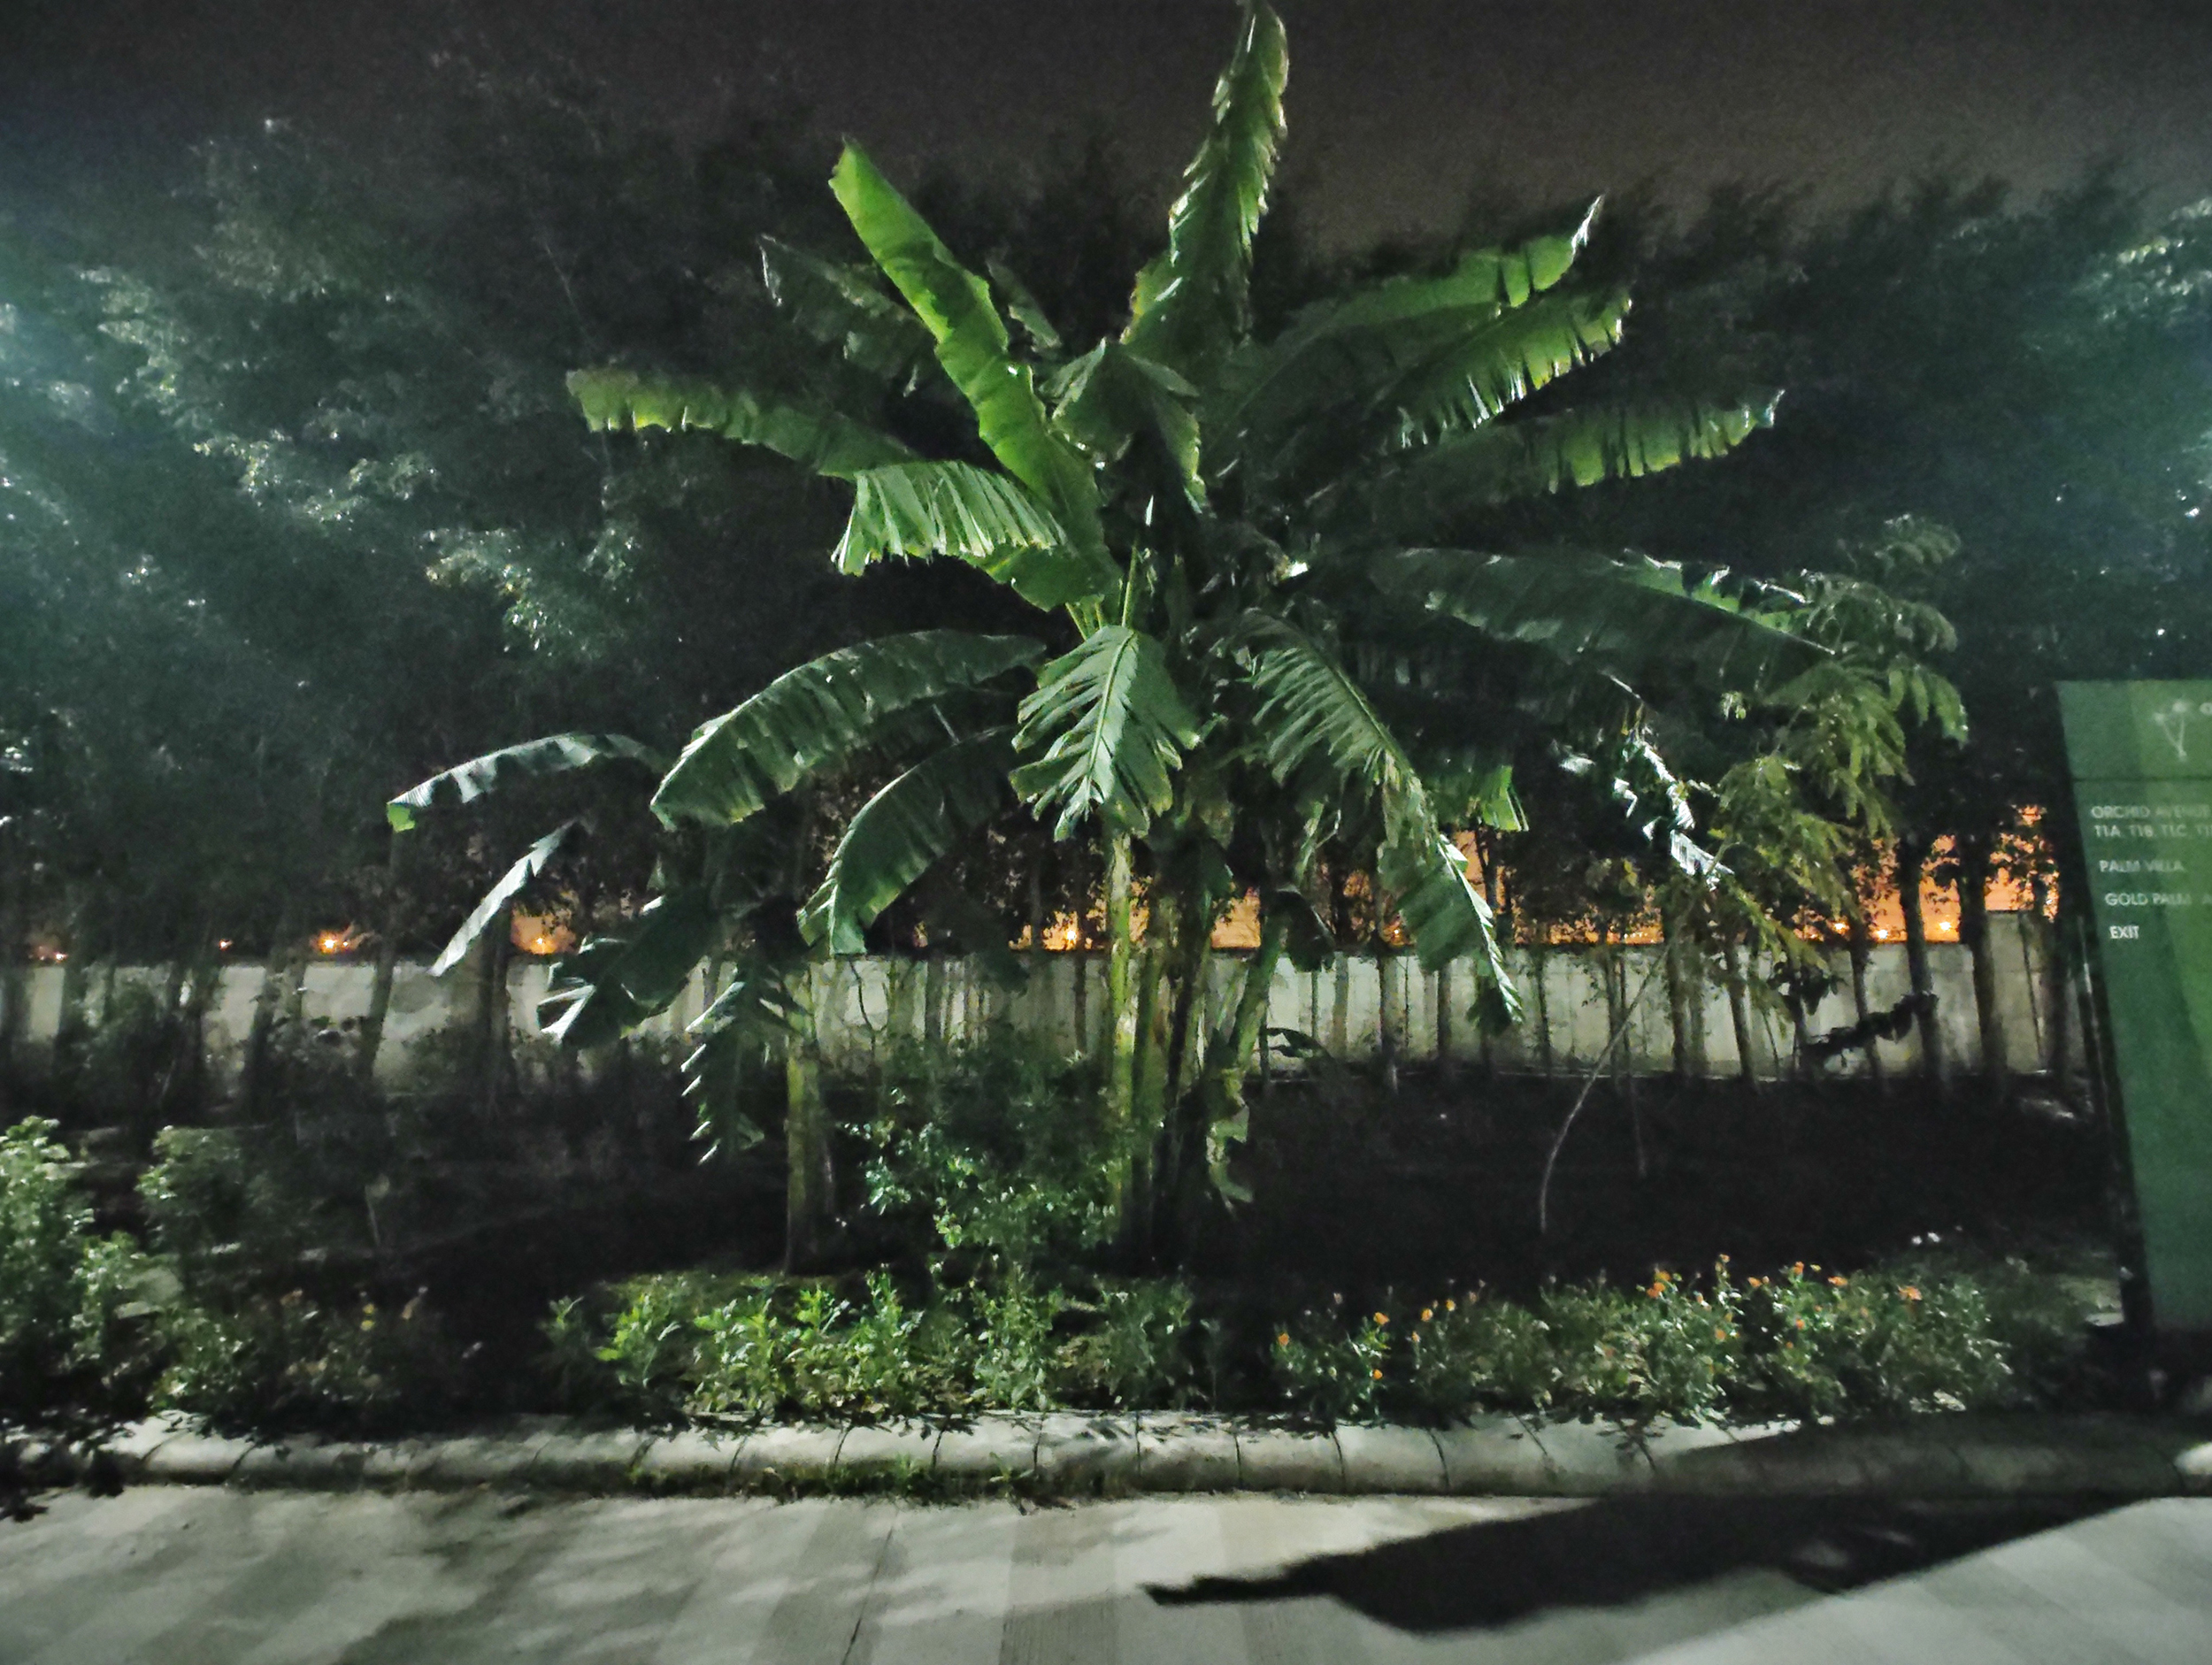 Motorola Edge Plus 2022 camera sample banana tree at night with ultrawide angle camera with night mode.